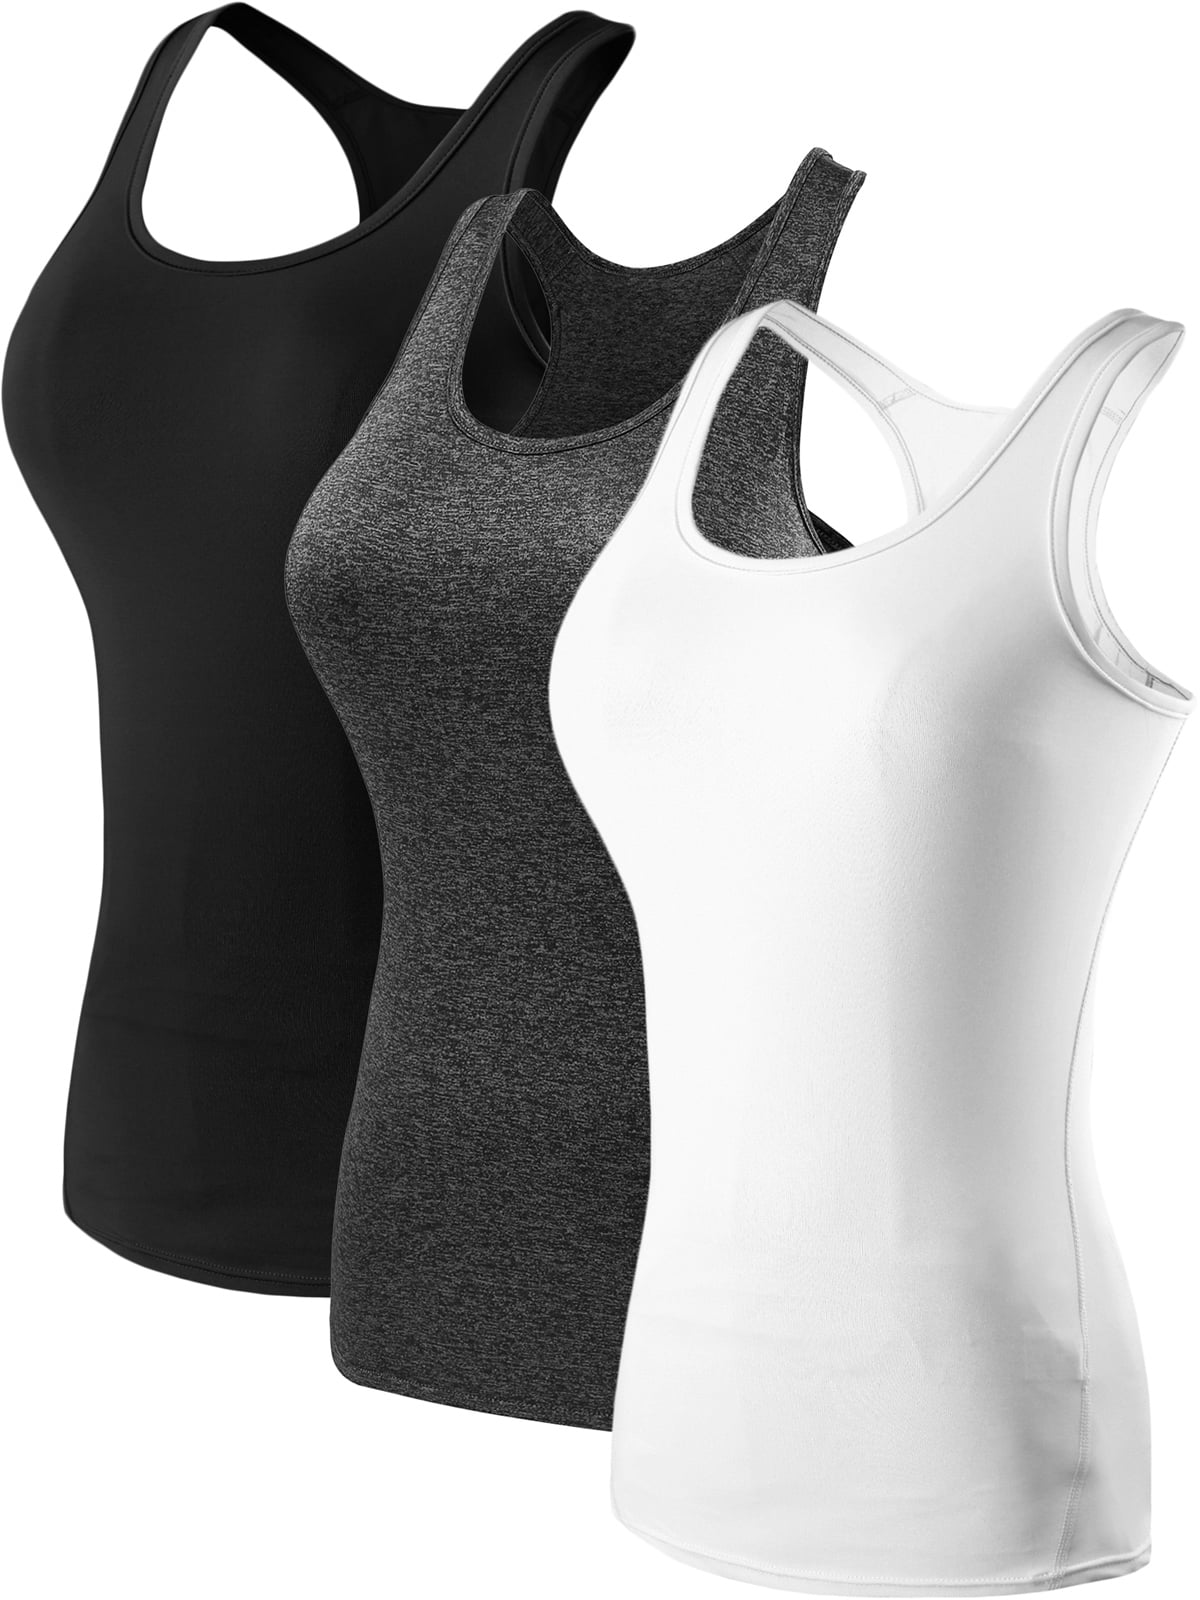 Lucky Brand Women's Cotton Stretch Tank Tops 4 Pack, Black/Gray/White XL 